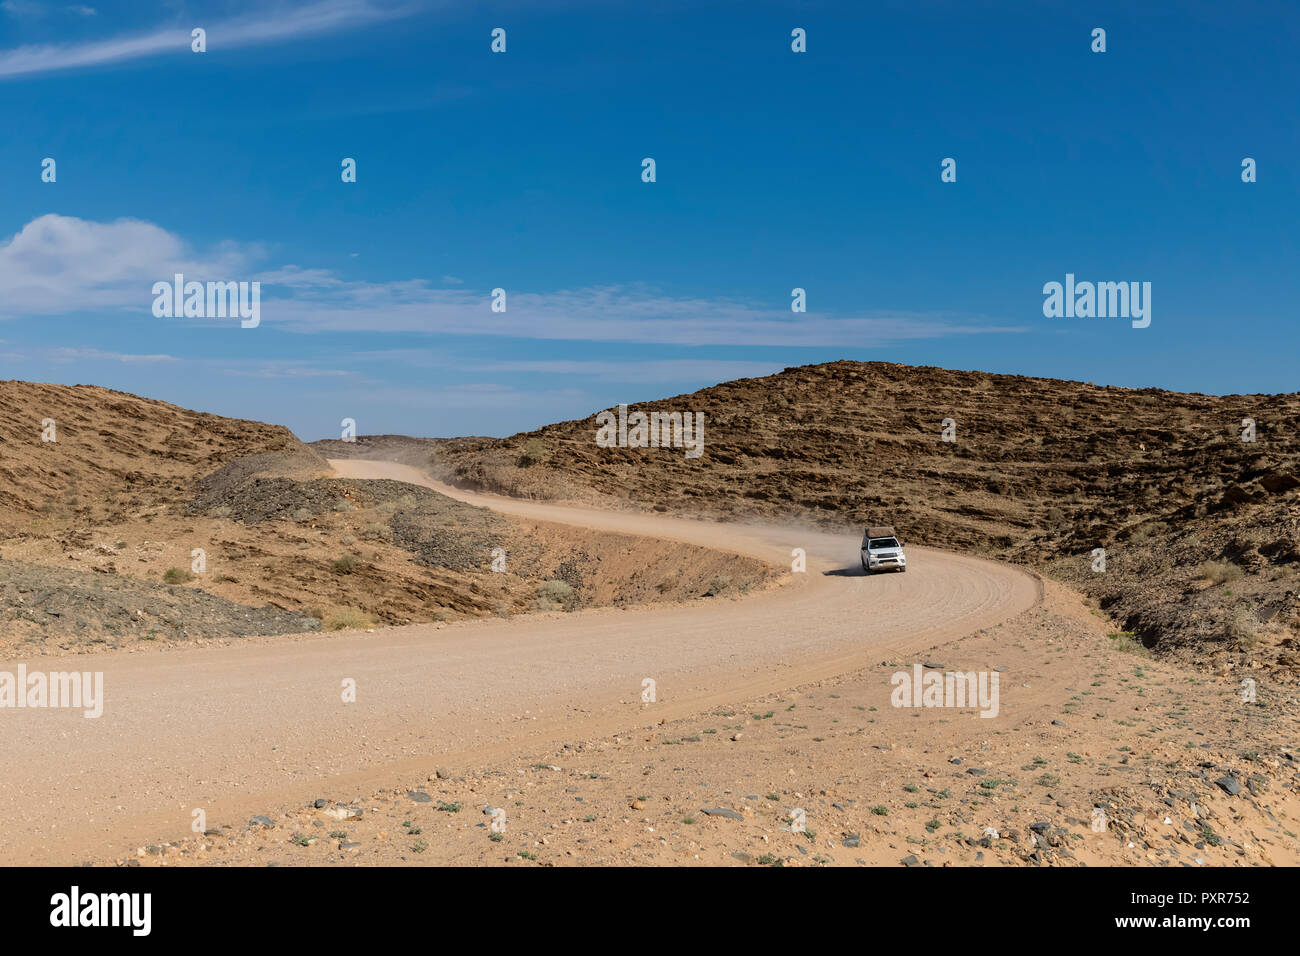 Africa, Namibia, Namib desert, Naukluft National Park, off-road vehicle on gravel road Stock Photo